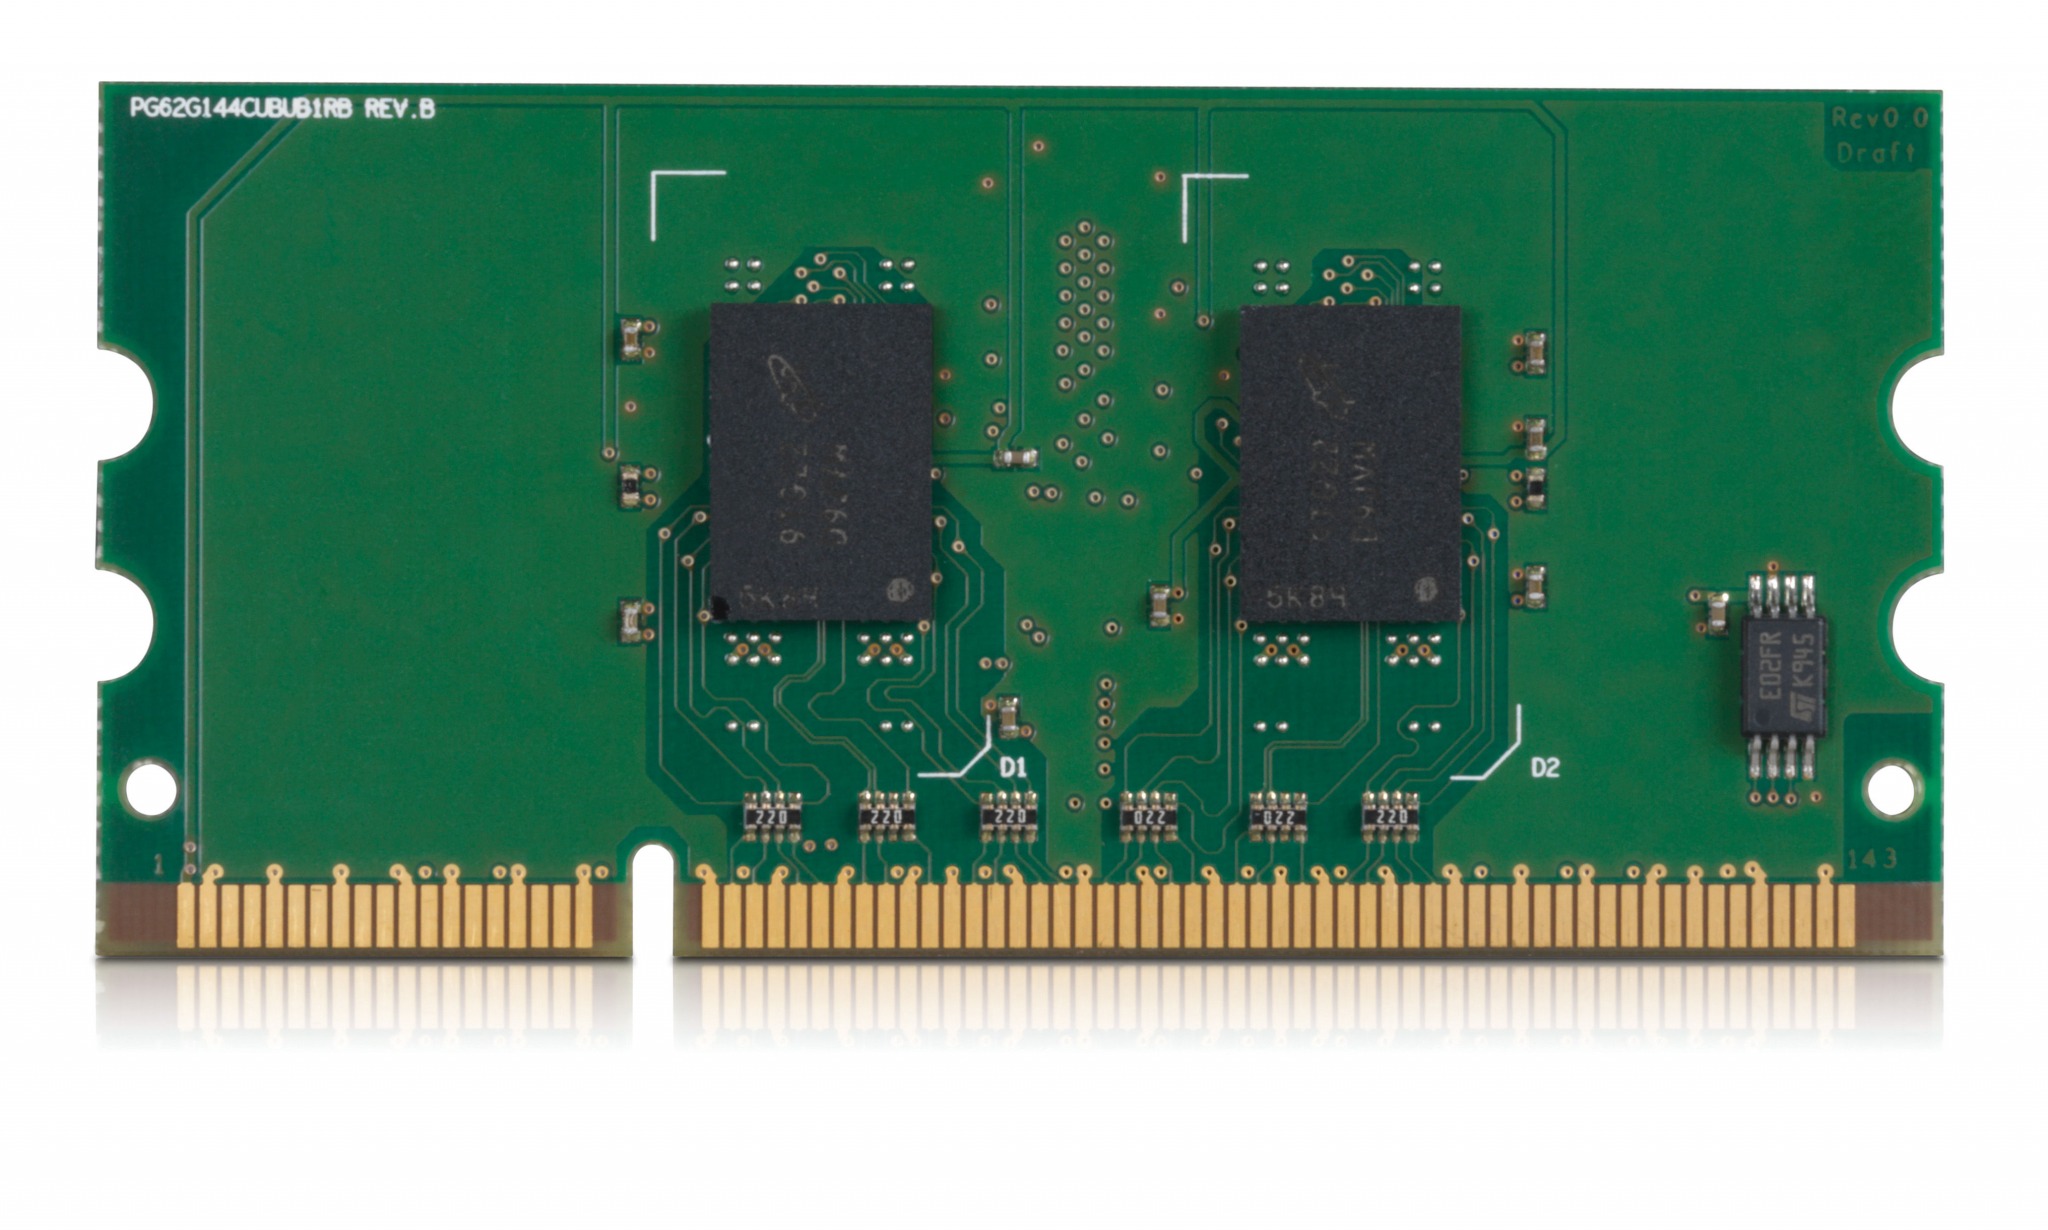 Купить память на 256. DIMM Memory 256mb. Ddr2 256mb.